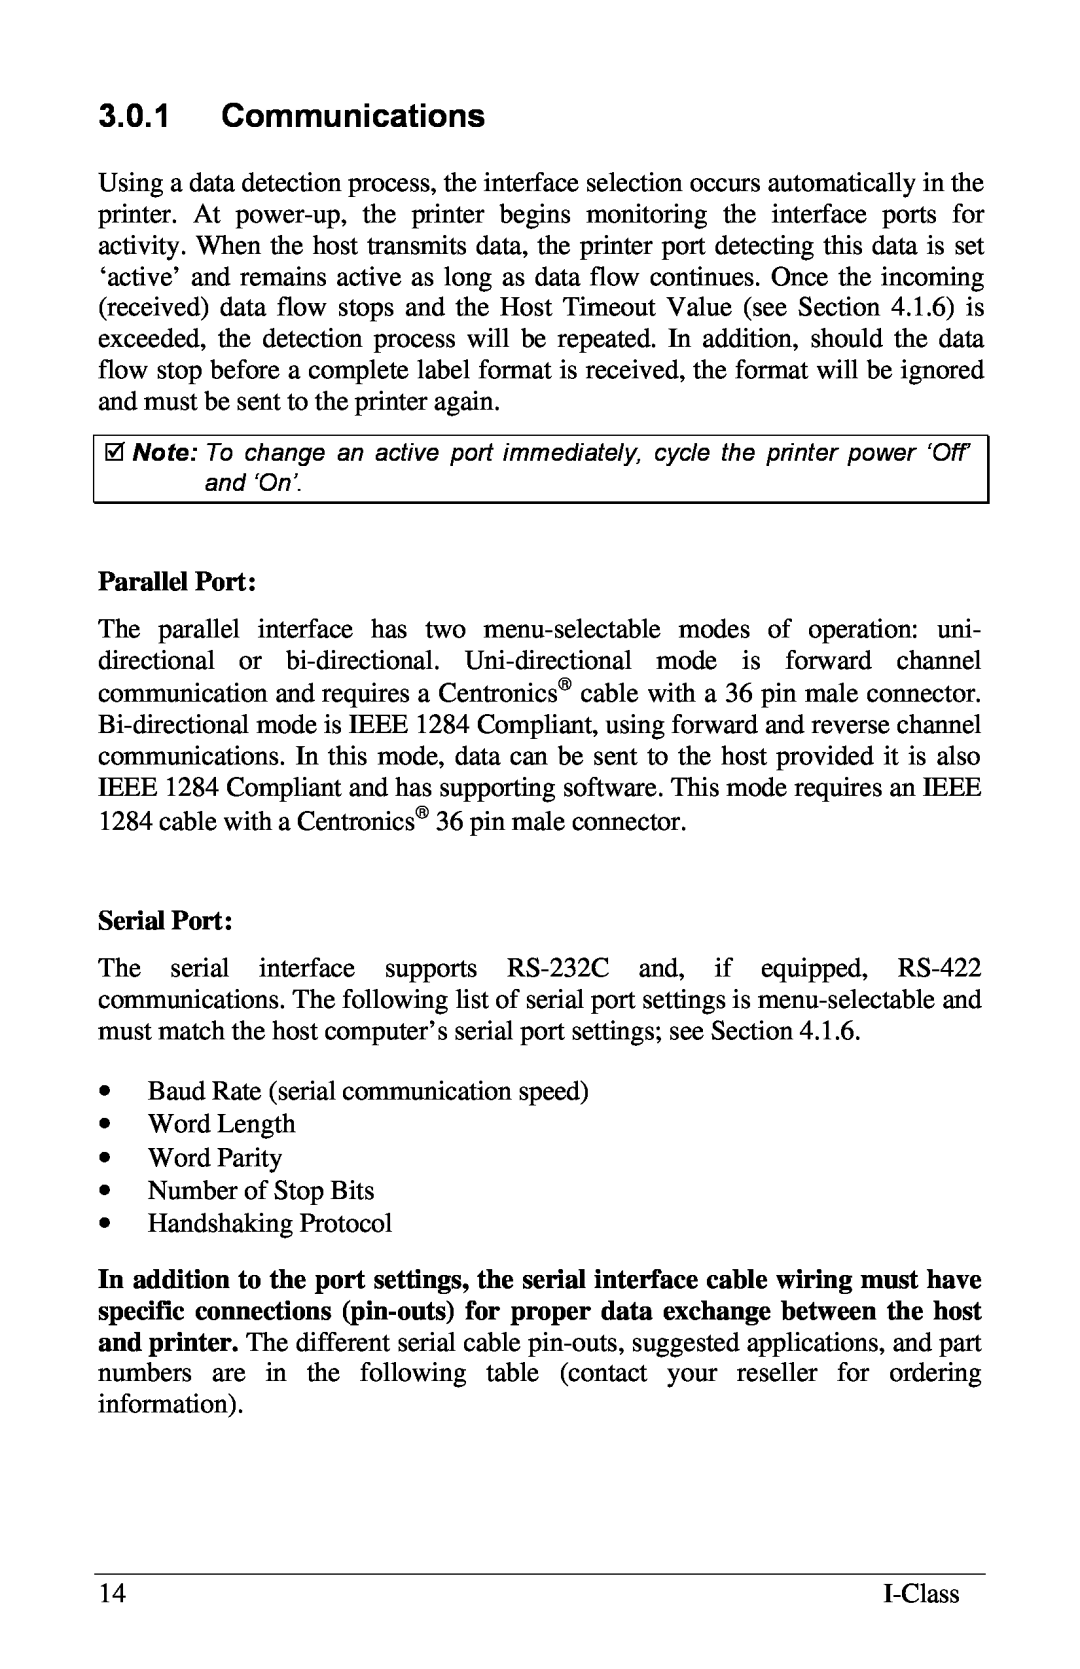 Xerox I Class manual 3.0.1Communications, Parallel Port, Serial Port 